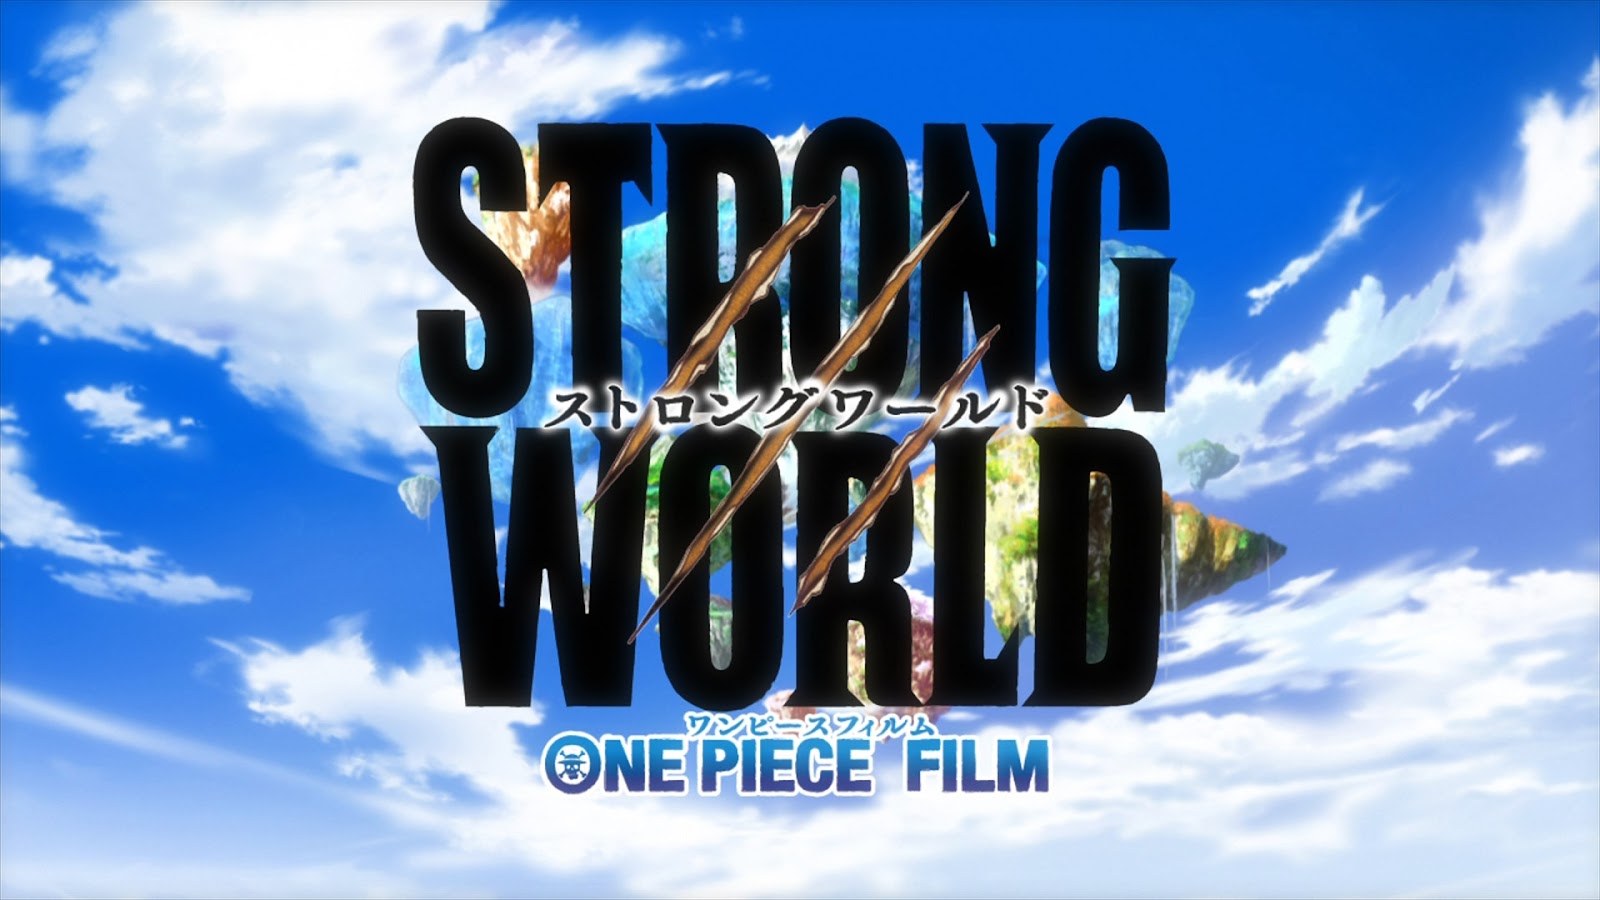 One Piece Film: Strong World (2009) 1080p BRRip Latino